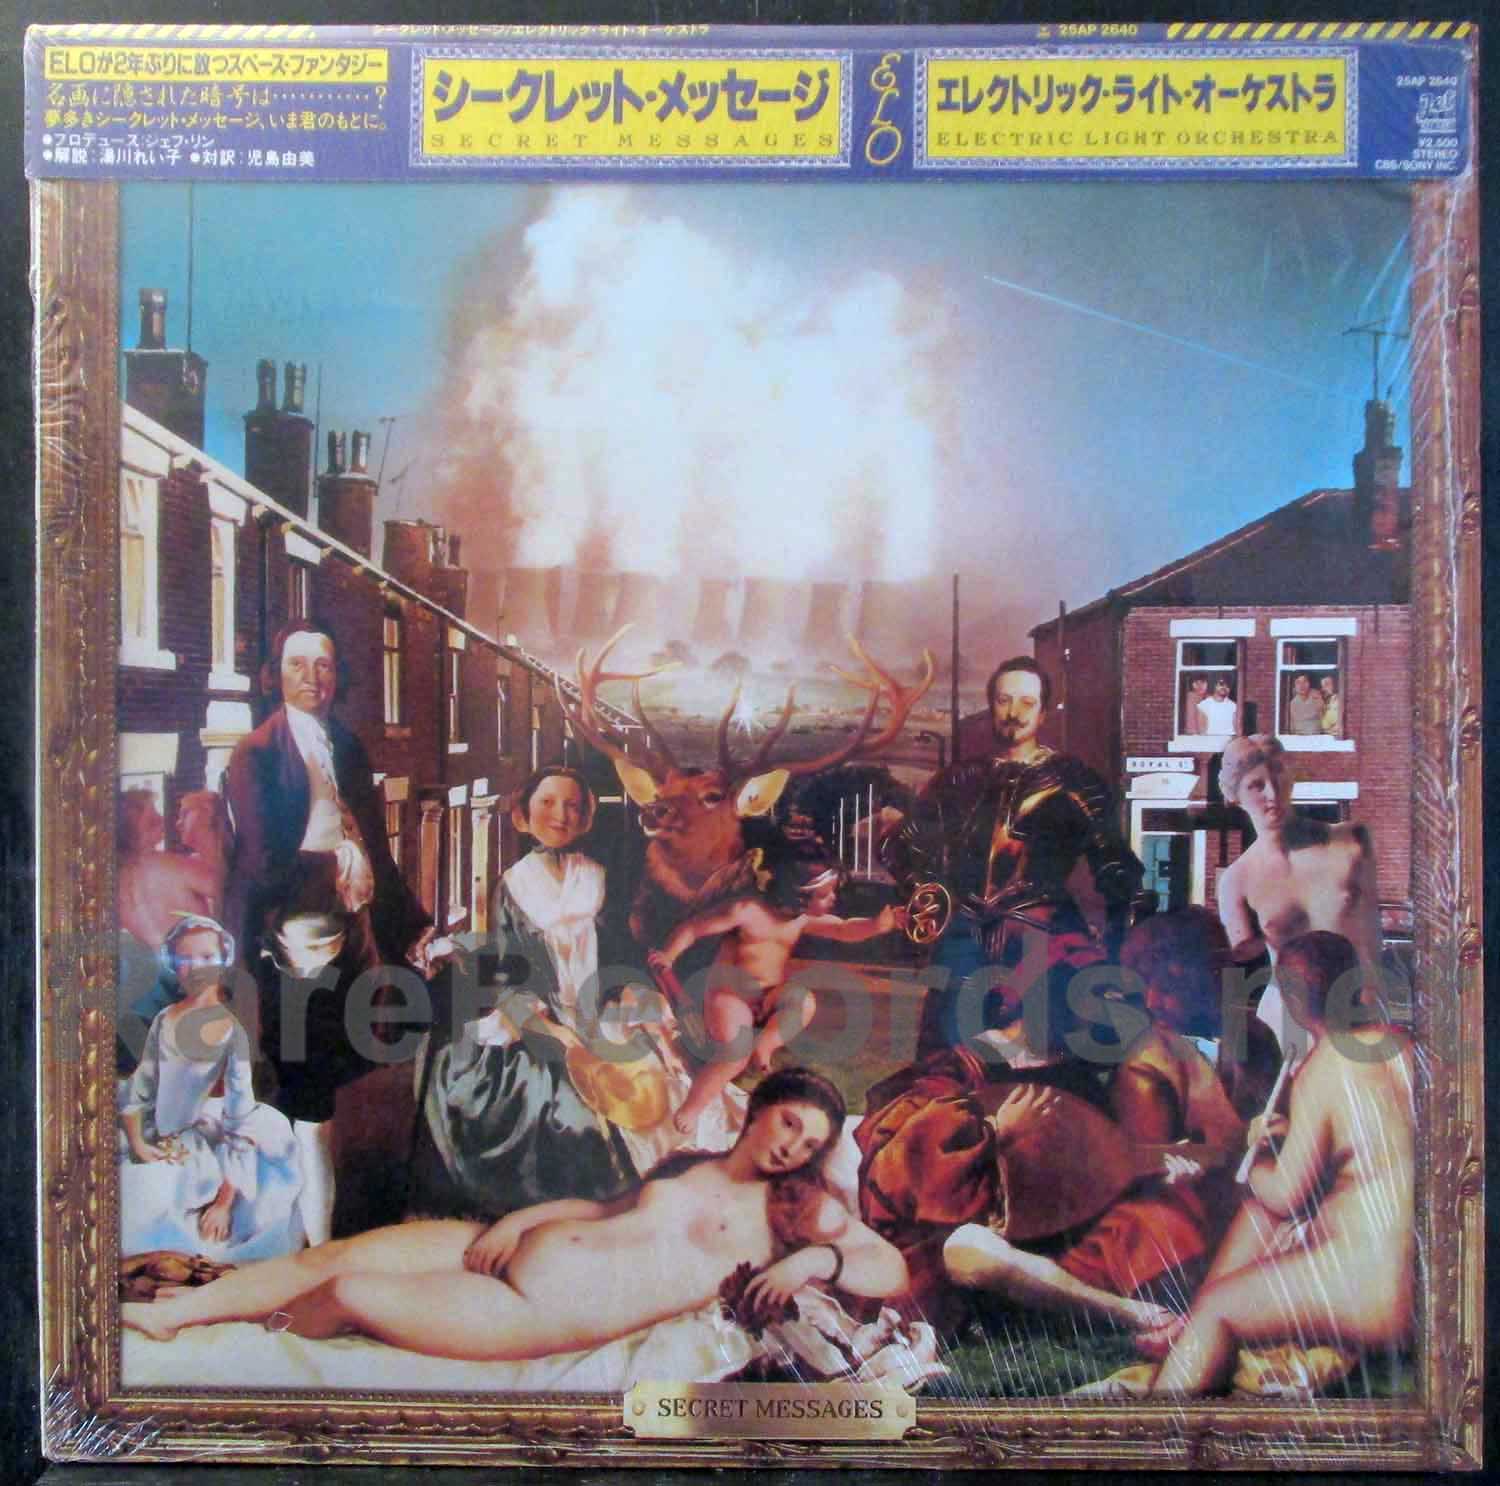 Electric Light Orchestra (ELO) - Secret Messages original Japan LP with obi